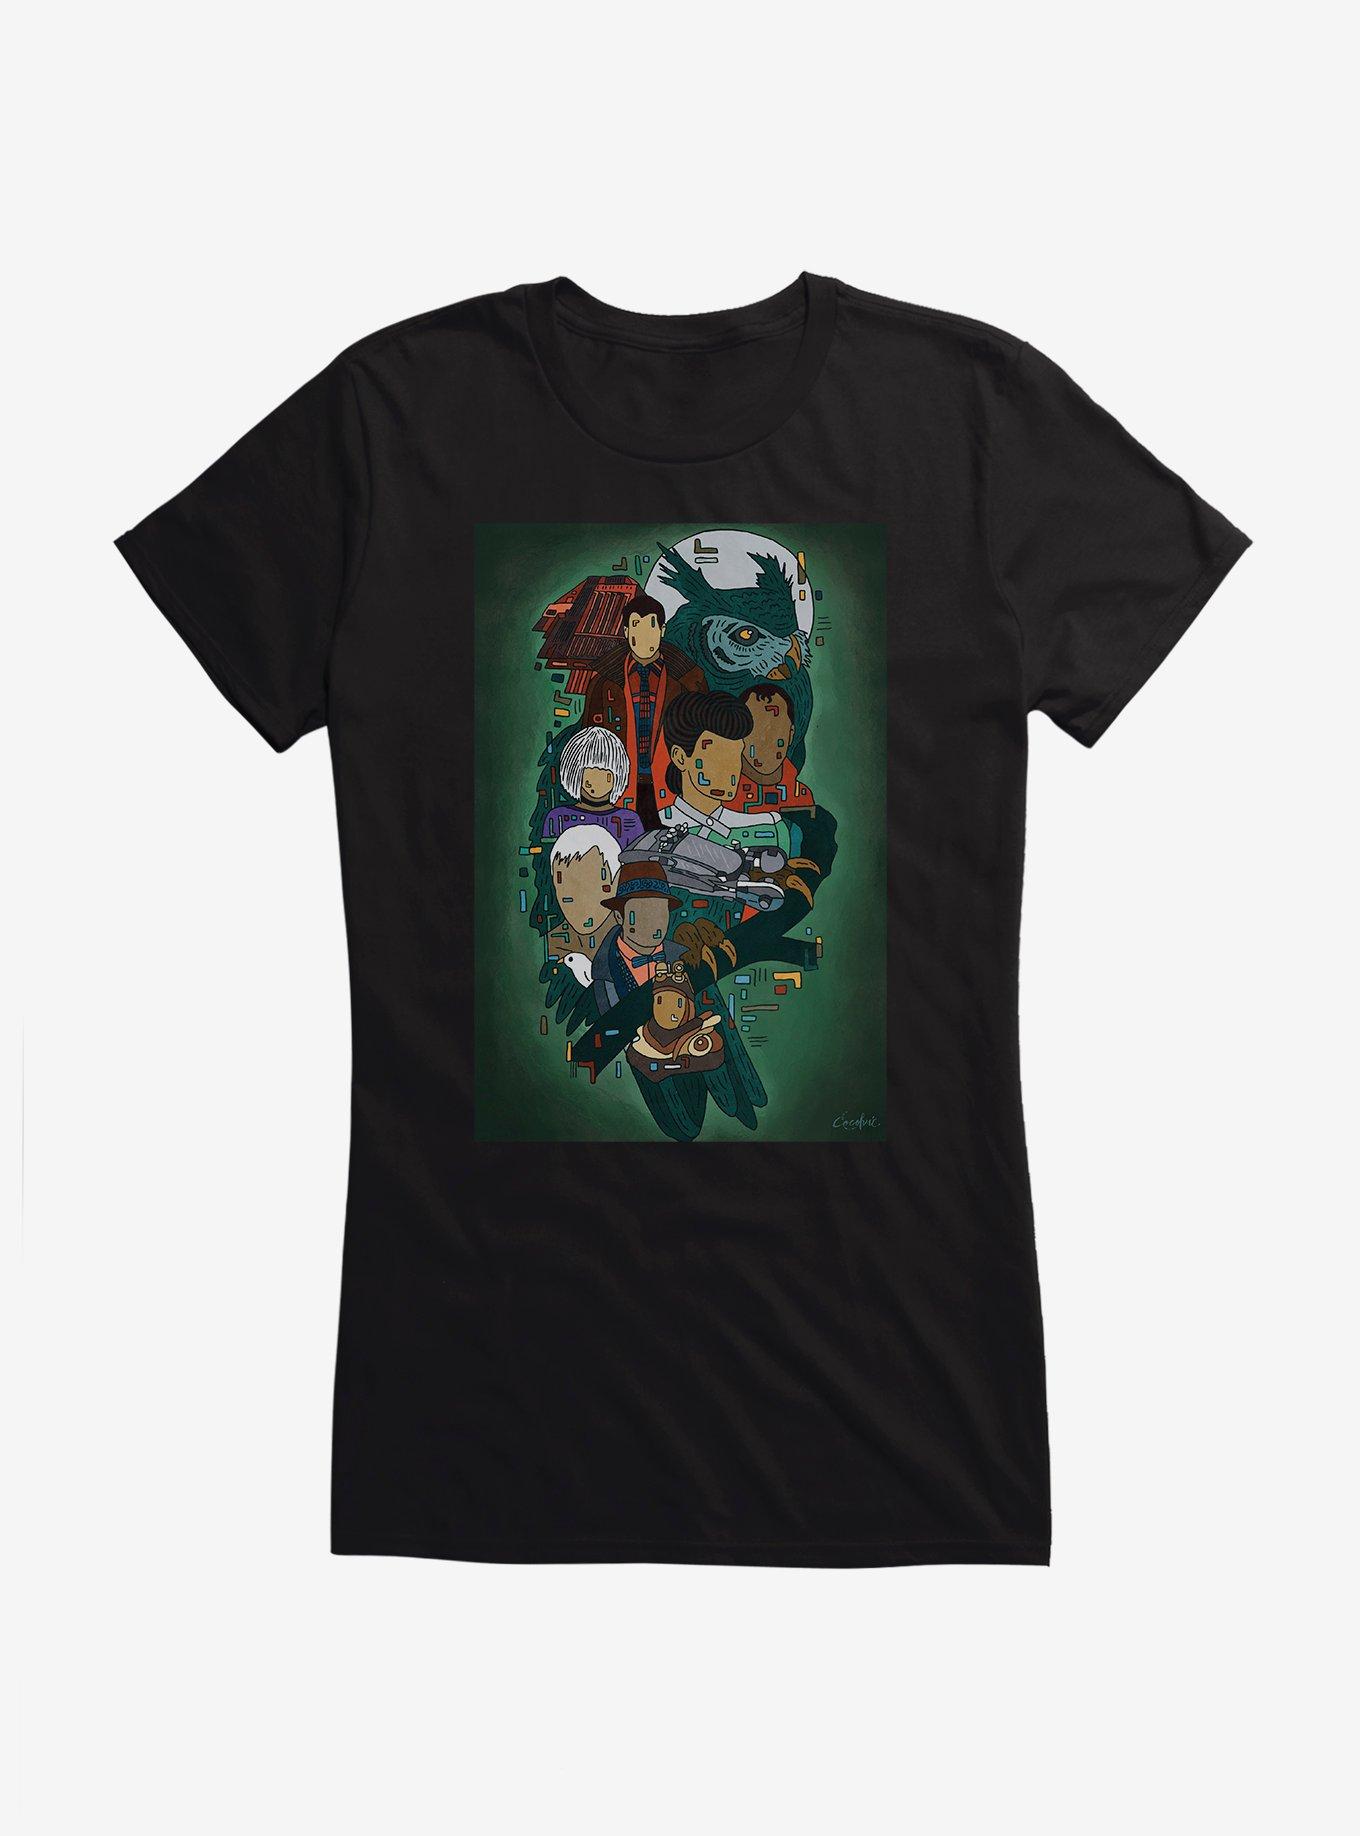 Blade Runner WB 100 Collage Girls T-Shirt